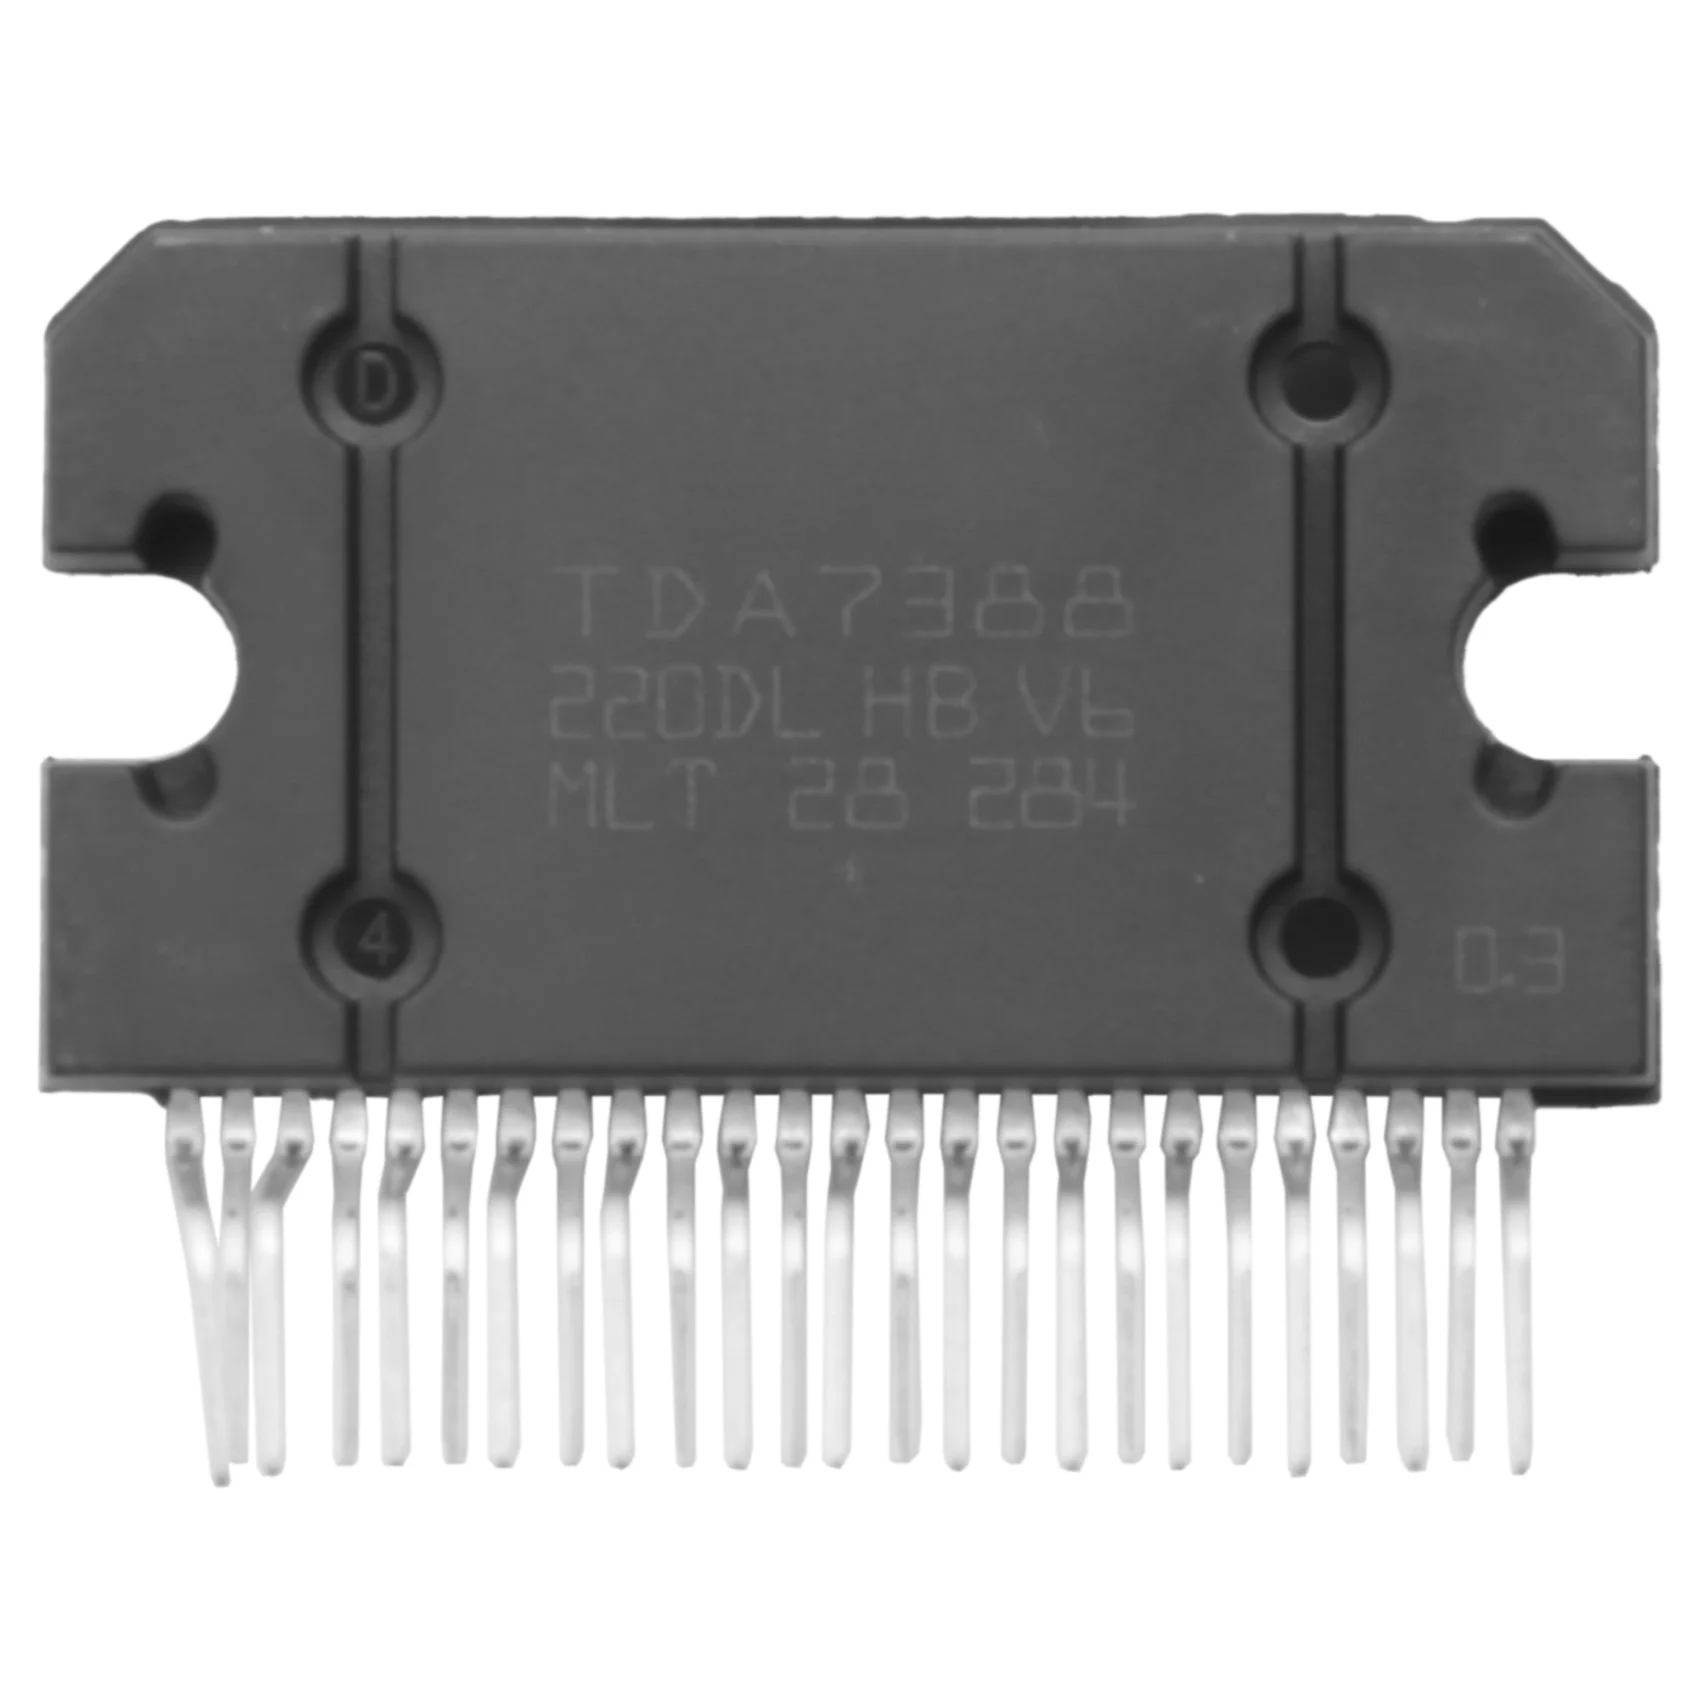 

TDA7388 Power Amplifier Audio Power Amplifier Integrated Circuit TDA-7388 New